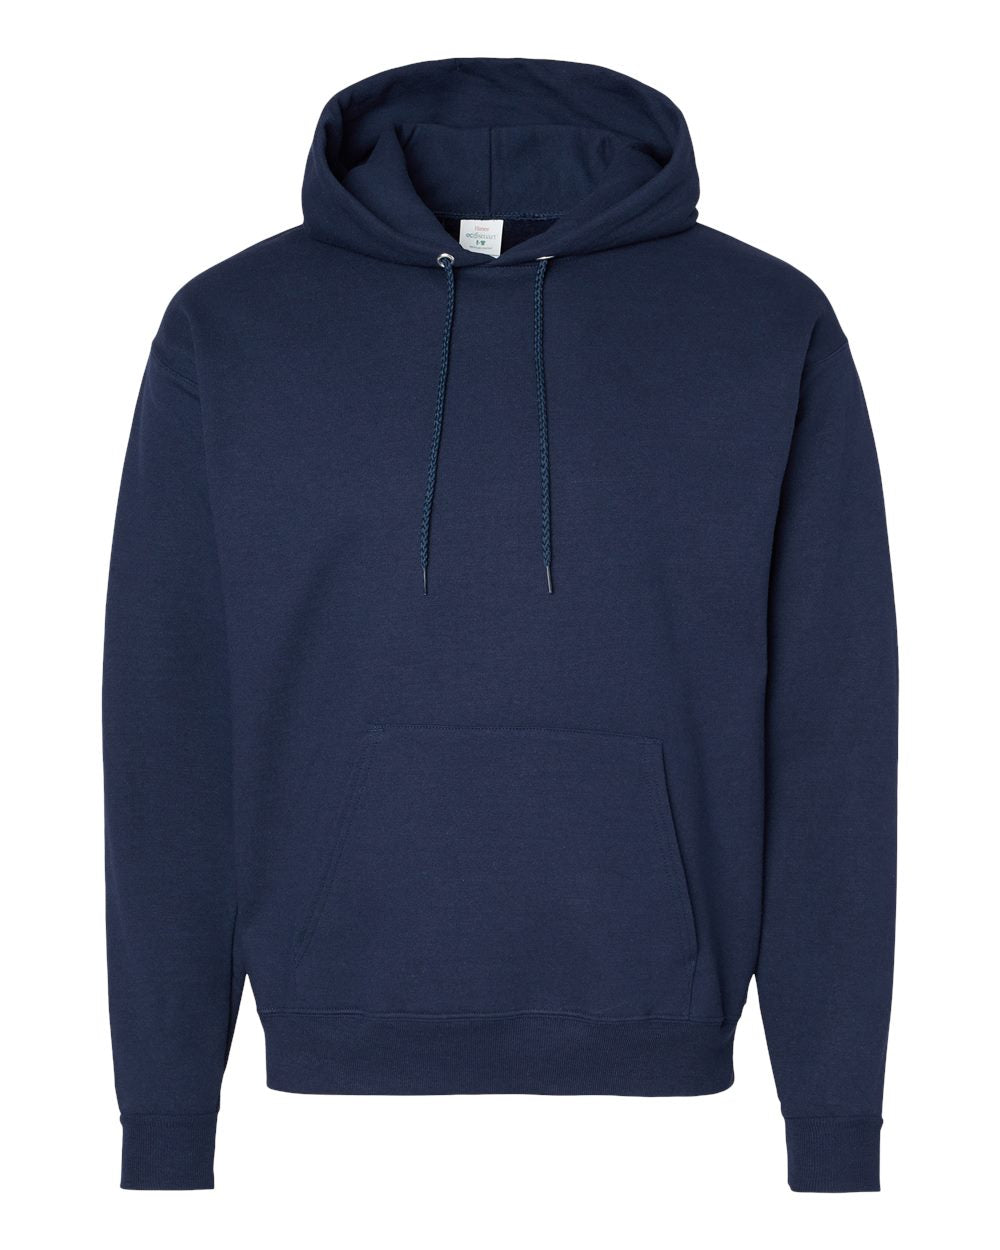 Pretreated Hanes P170 Ecosmart Hooded Sweatshirt – CheaterTee